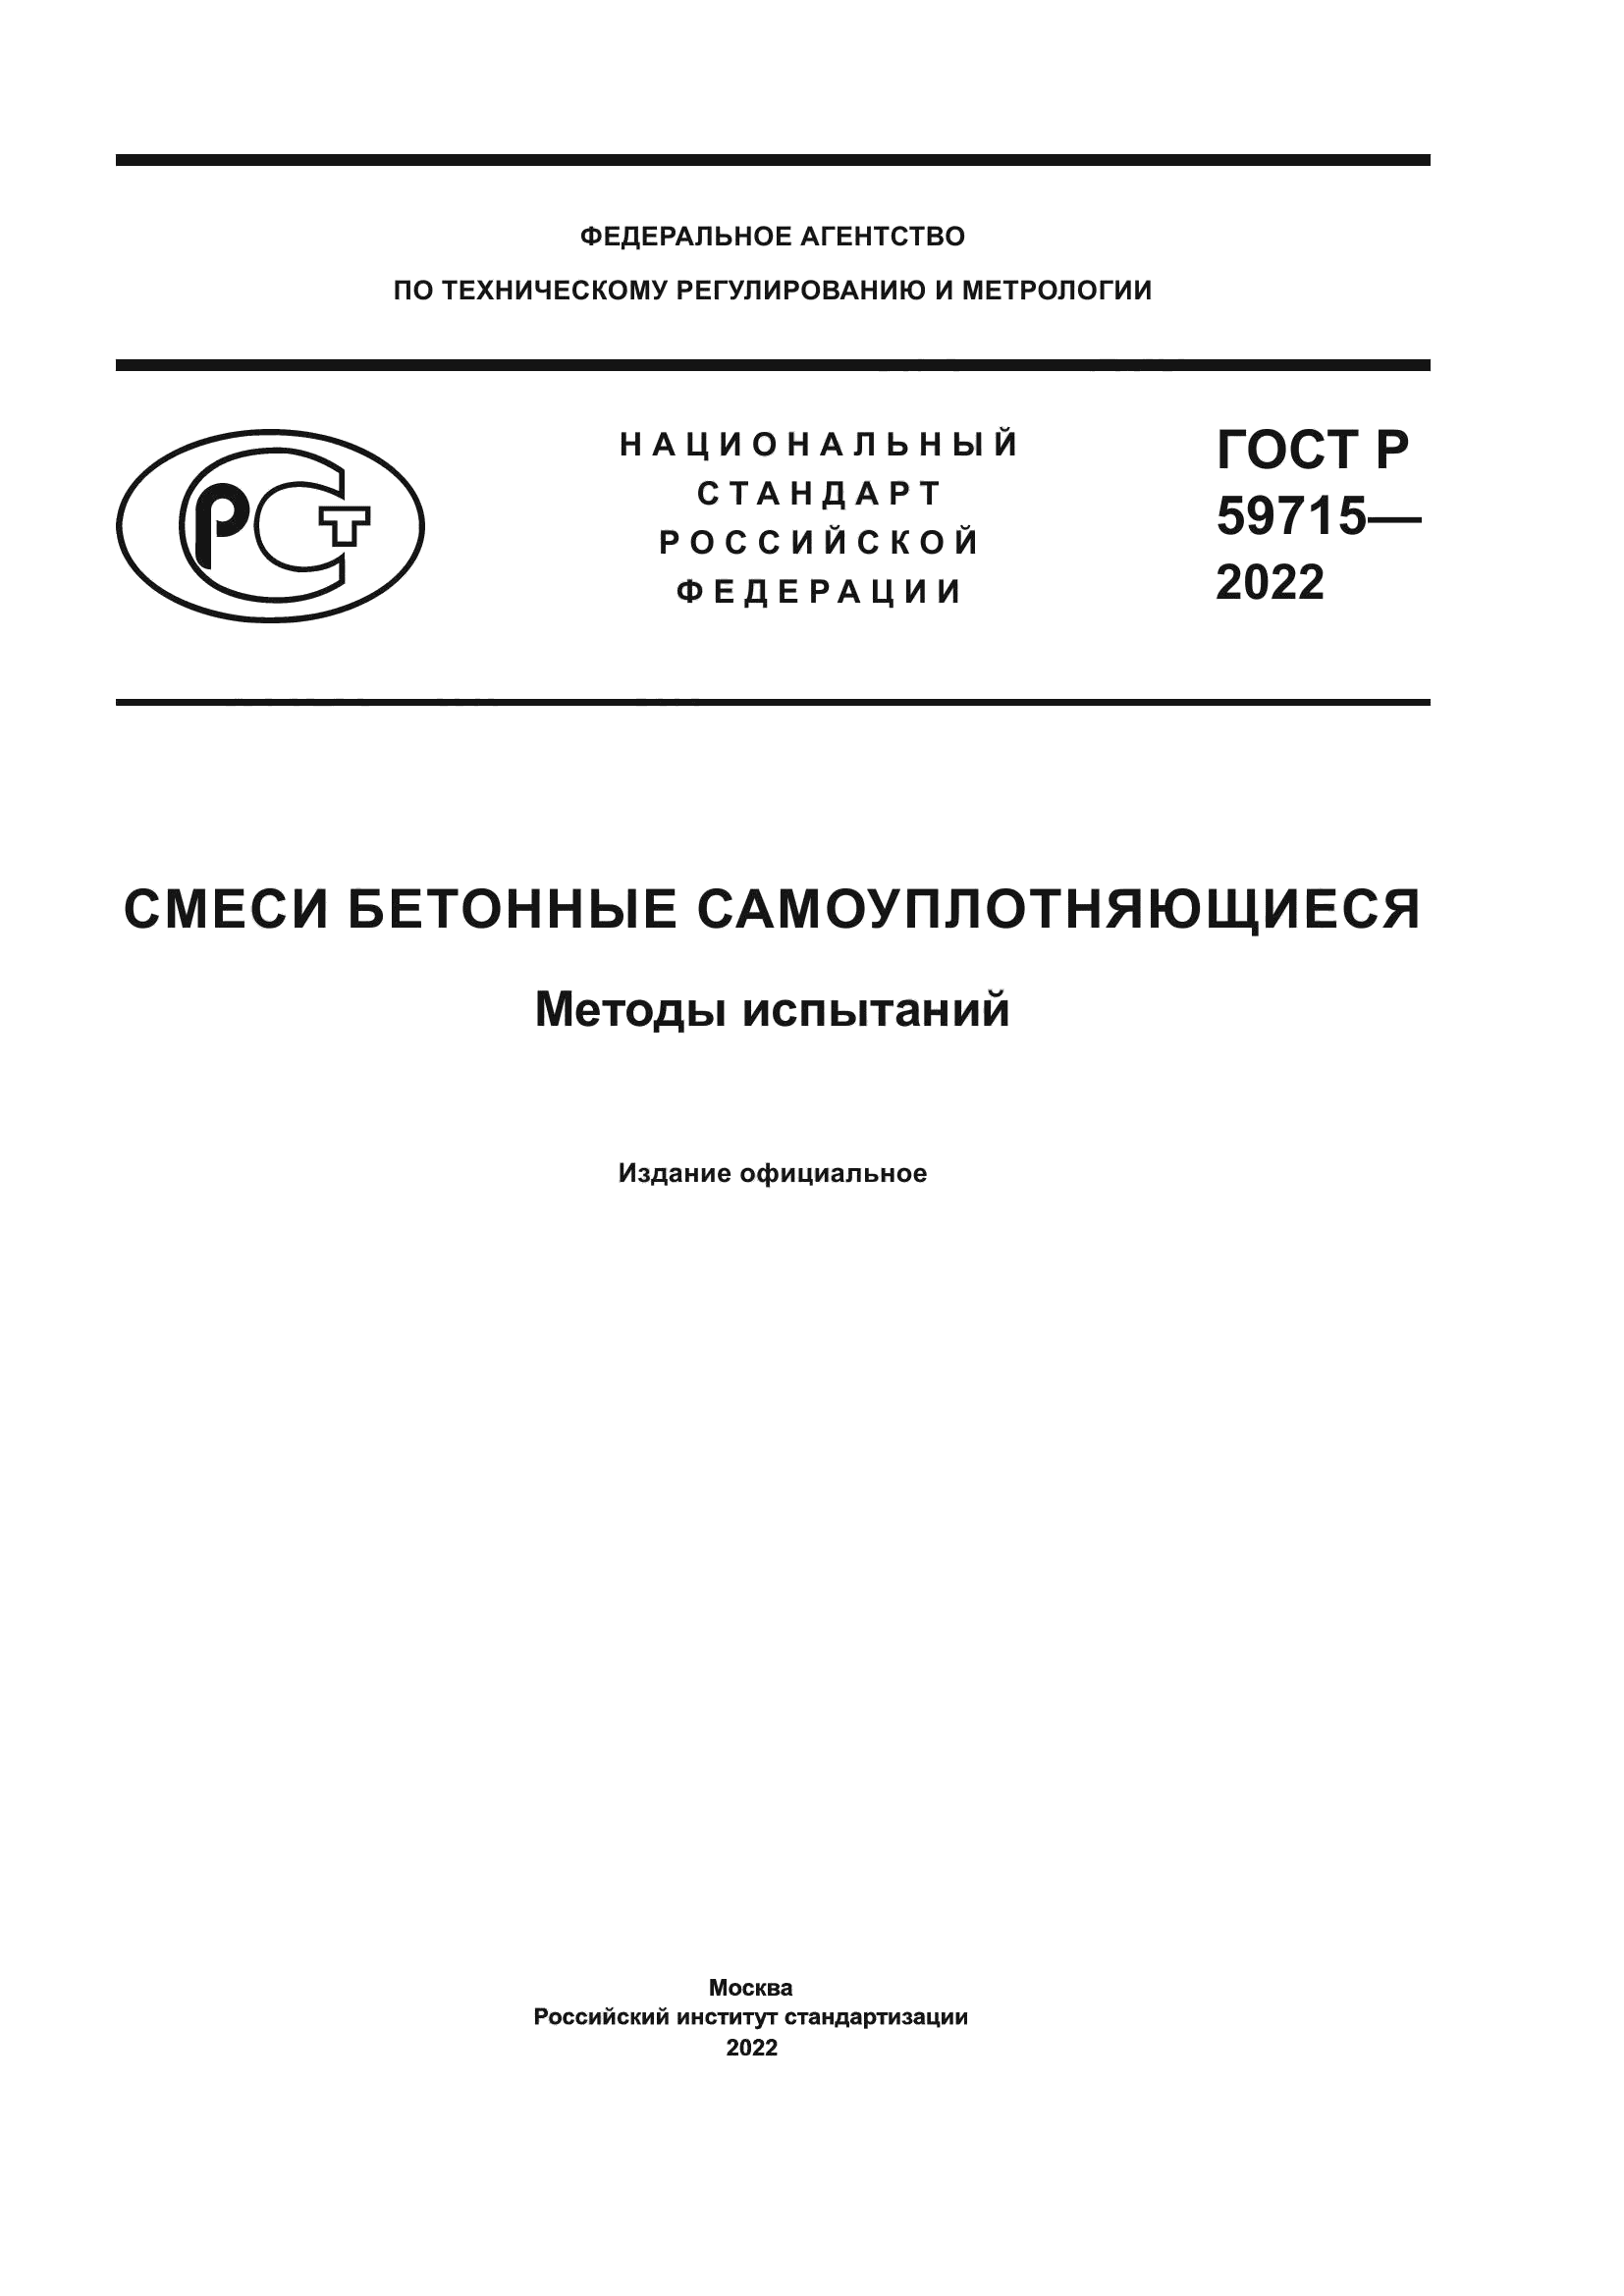 ГОСТ Р 59715-2022